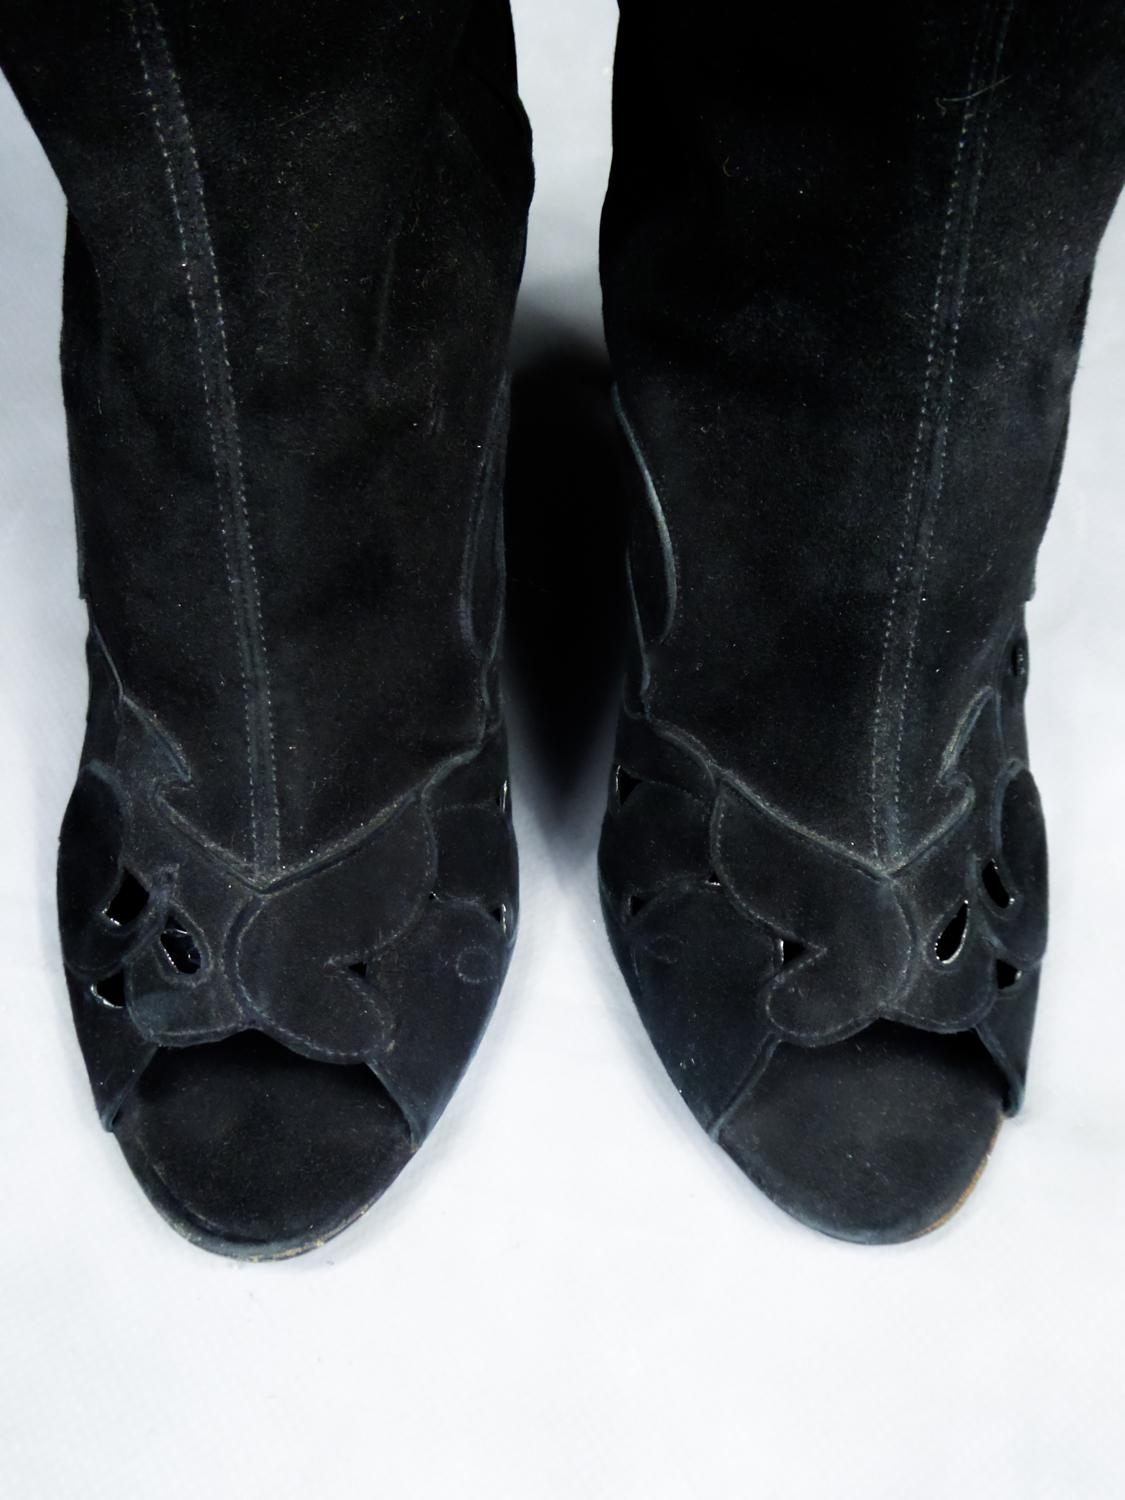 Women's Gianni Versace Boots in Suede and Swarovski Rhinestone Circa 2000 For Sale